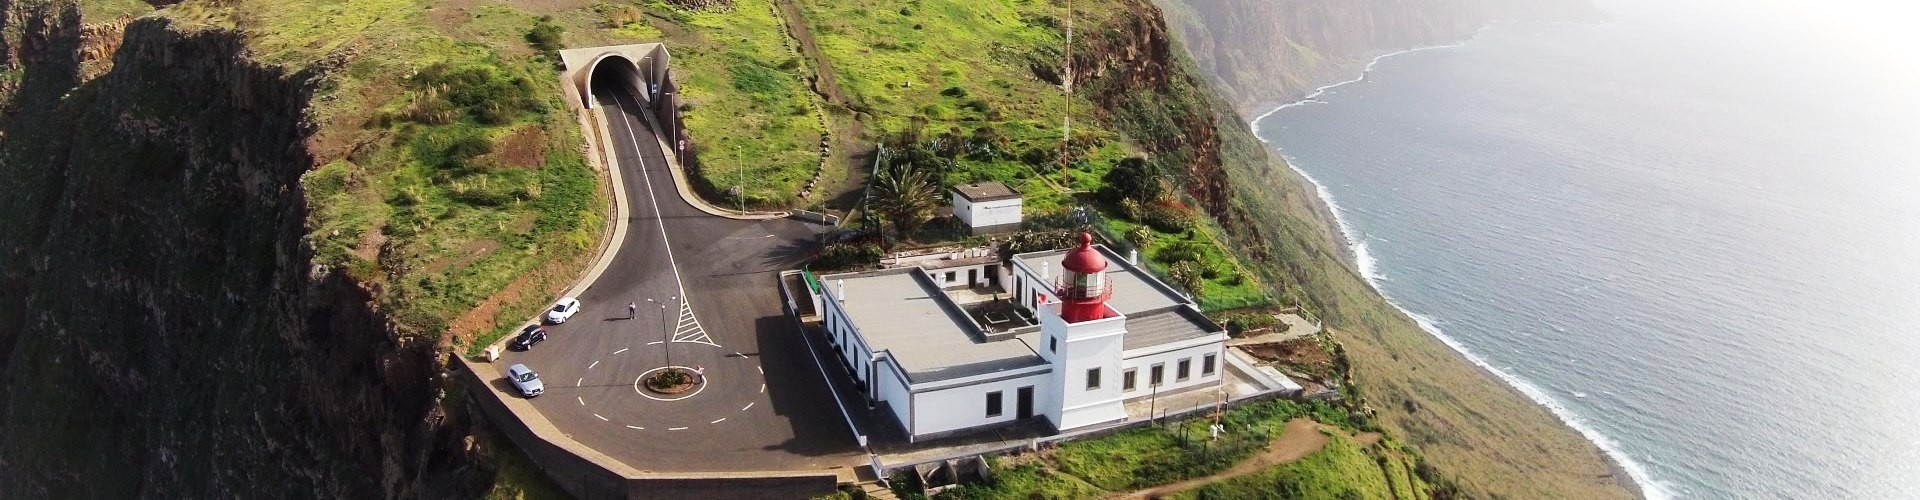 Miradouro Ponta do Pargo Light House Viewpoint, Madeira